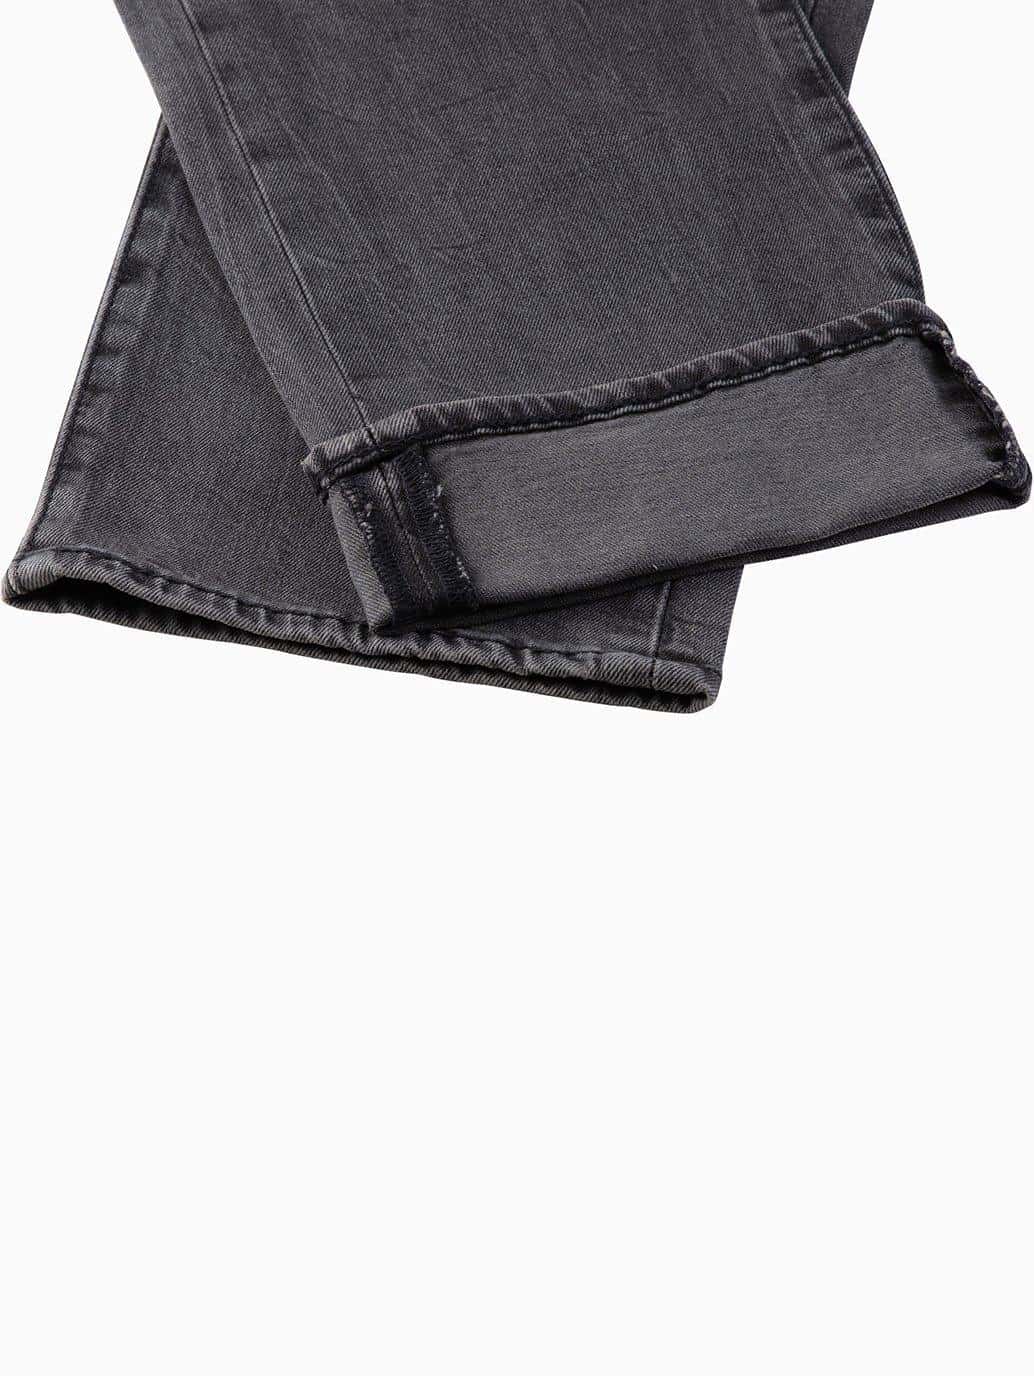 levis malaysia 501 original fit jeans for men parrish bottom hem